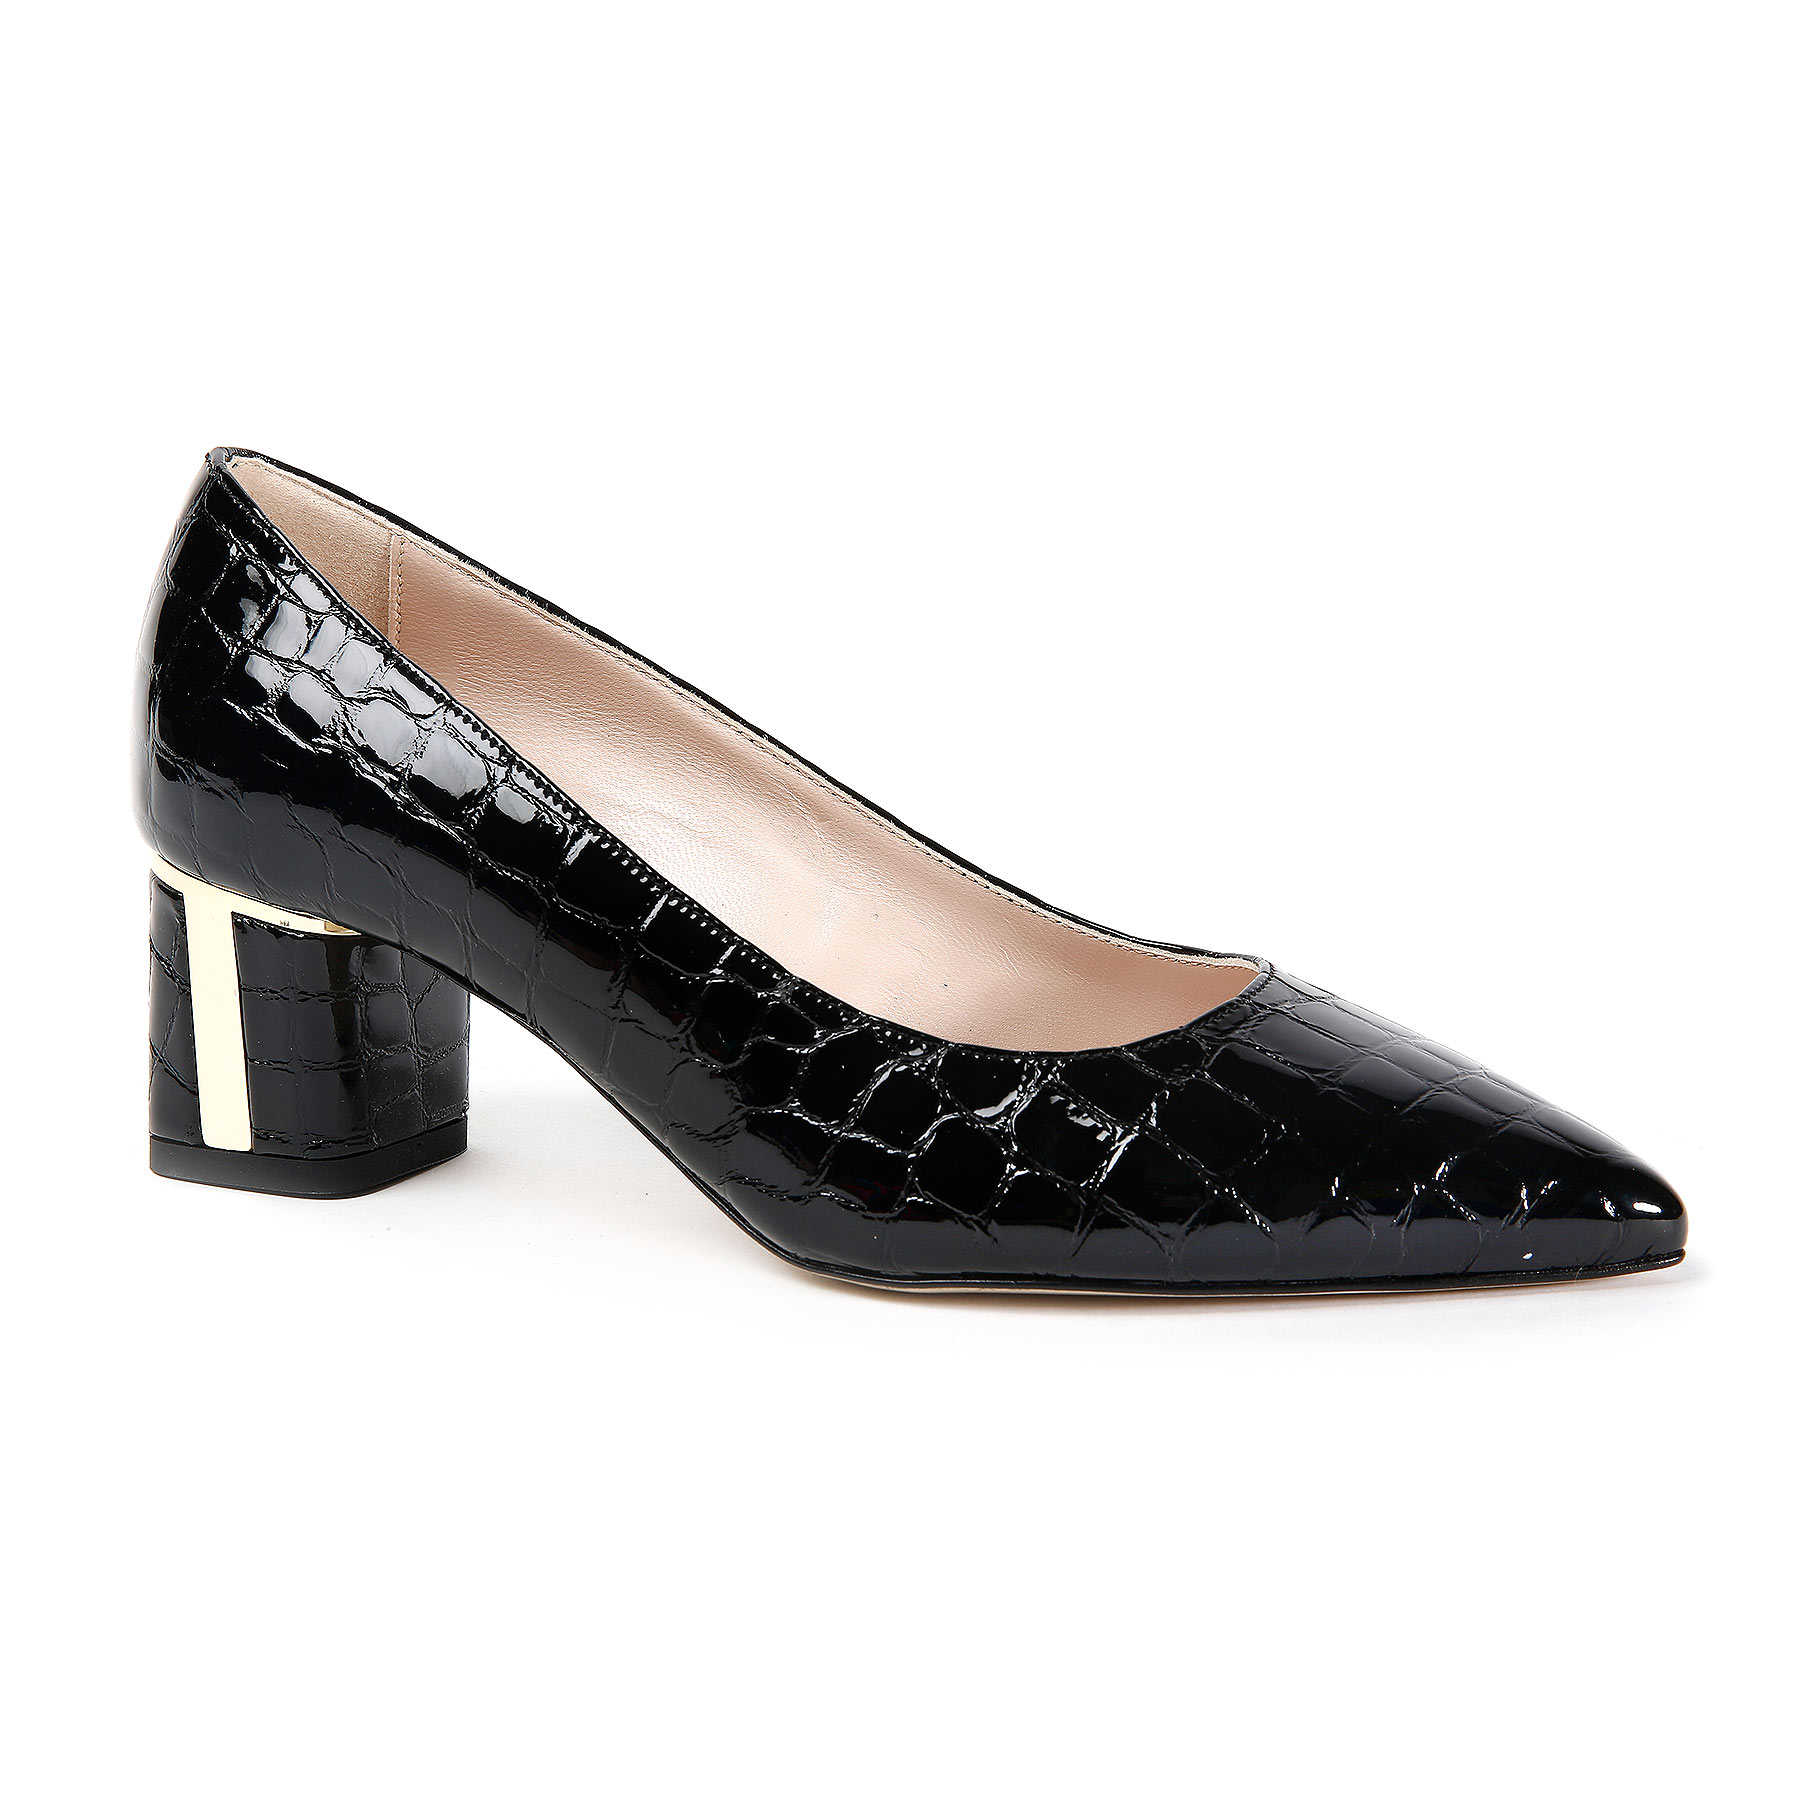 black court shoes block heel leather